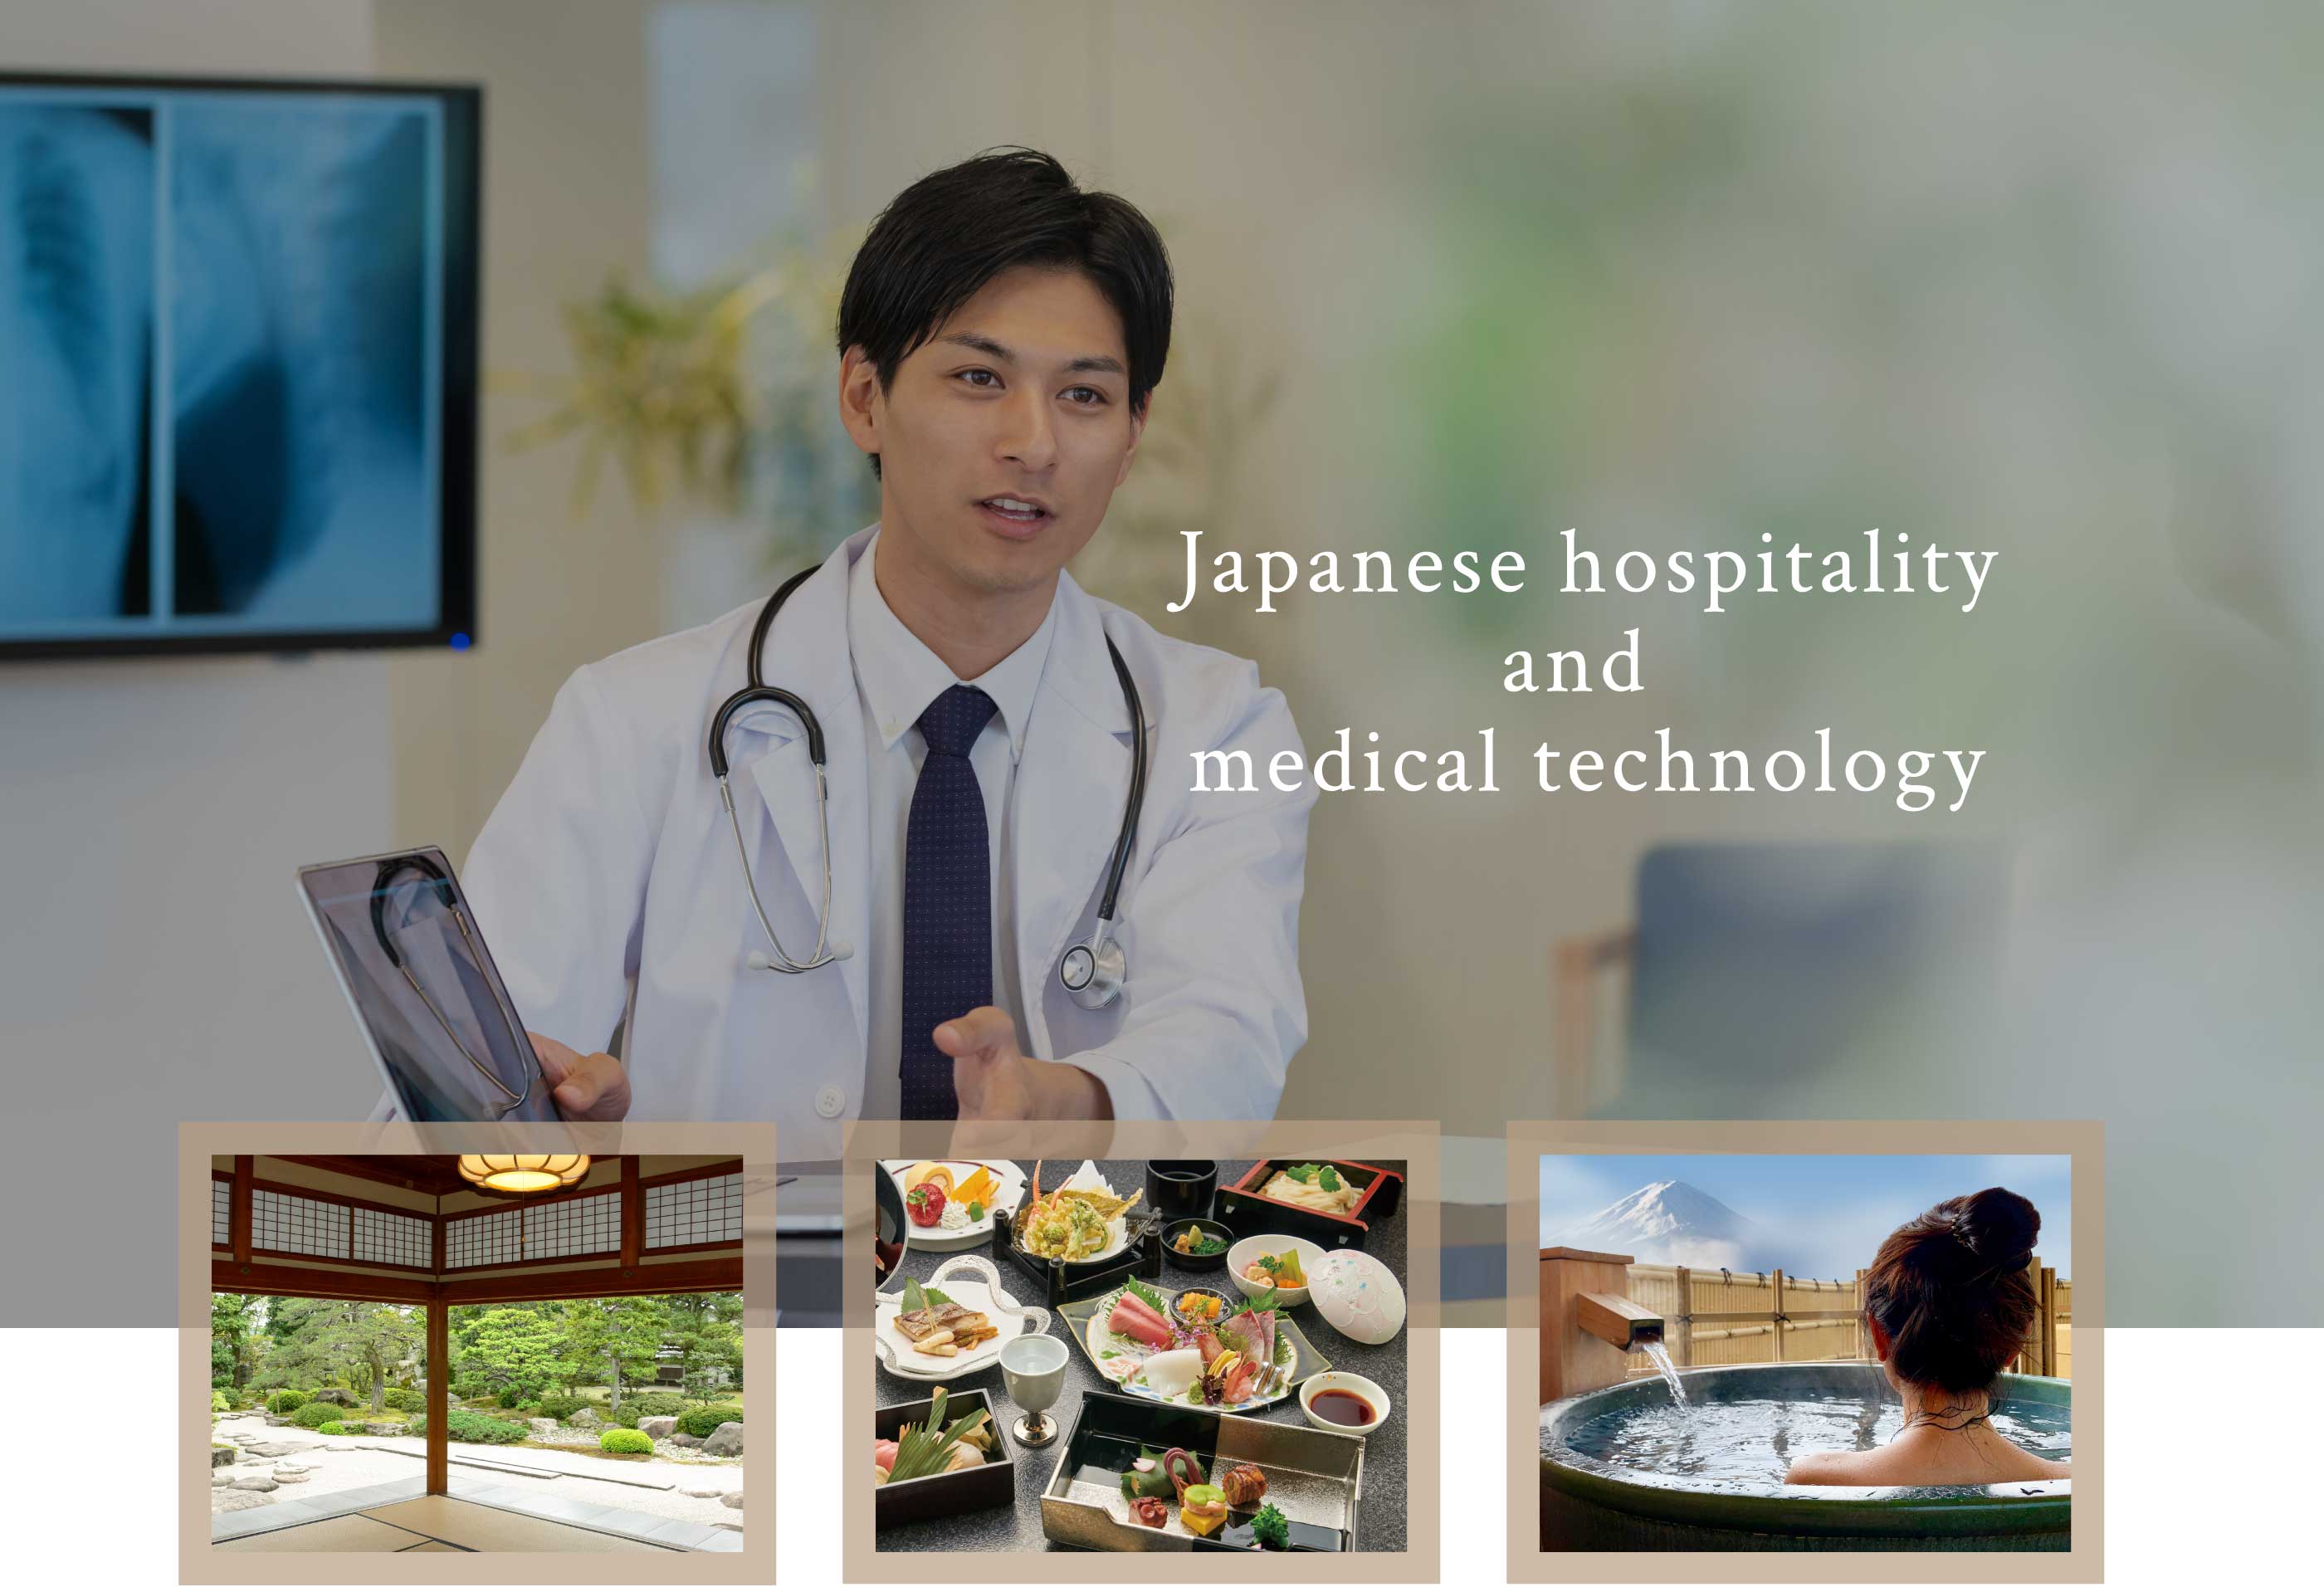 Japanese hospitality and medical technology